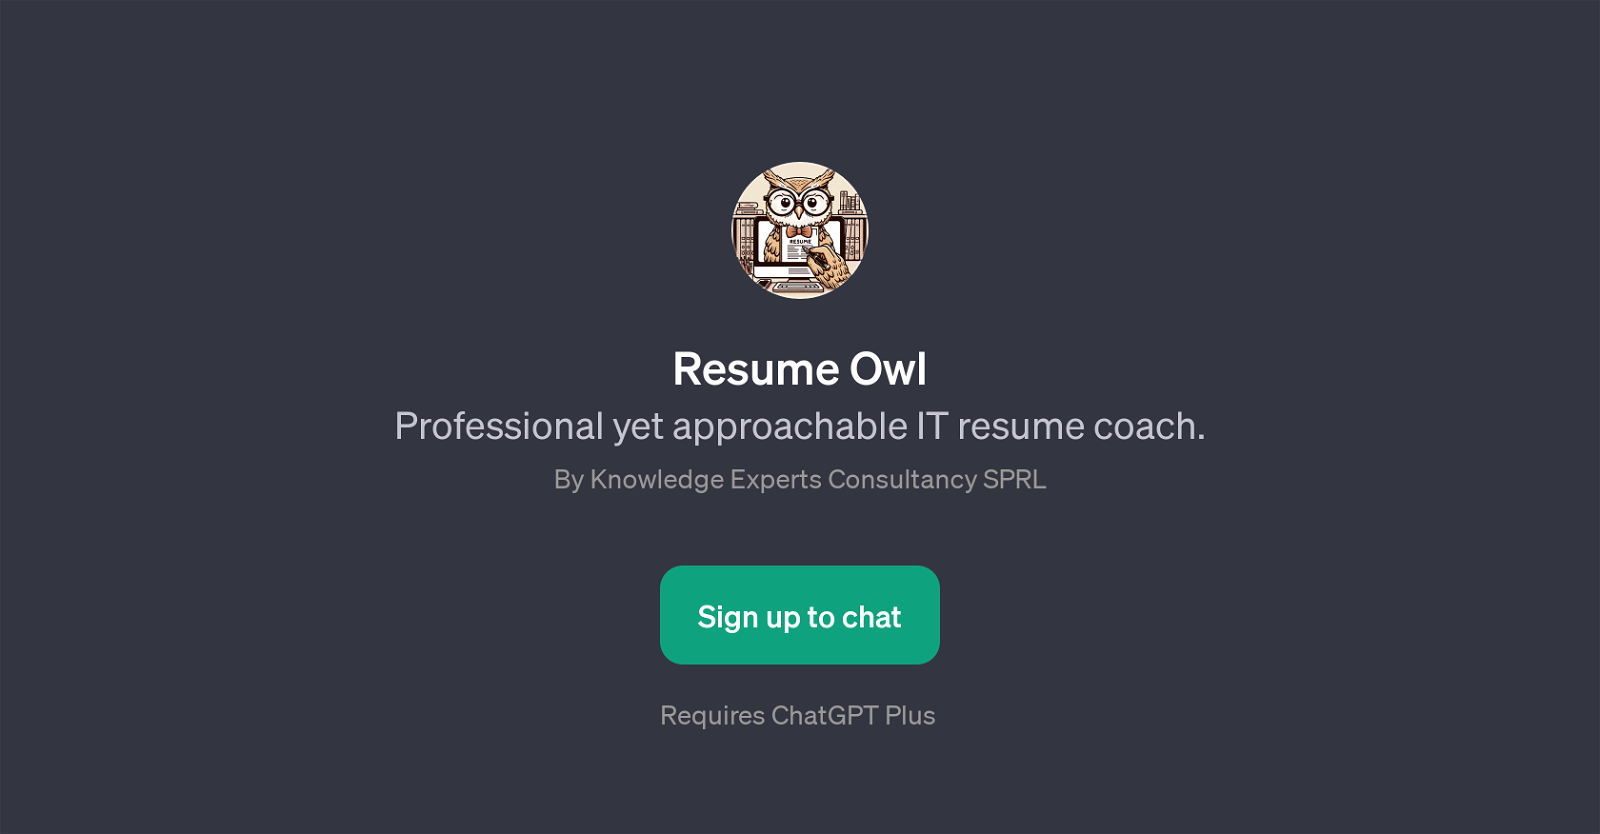 Resume Owl website